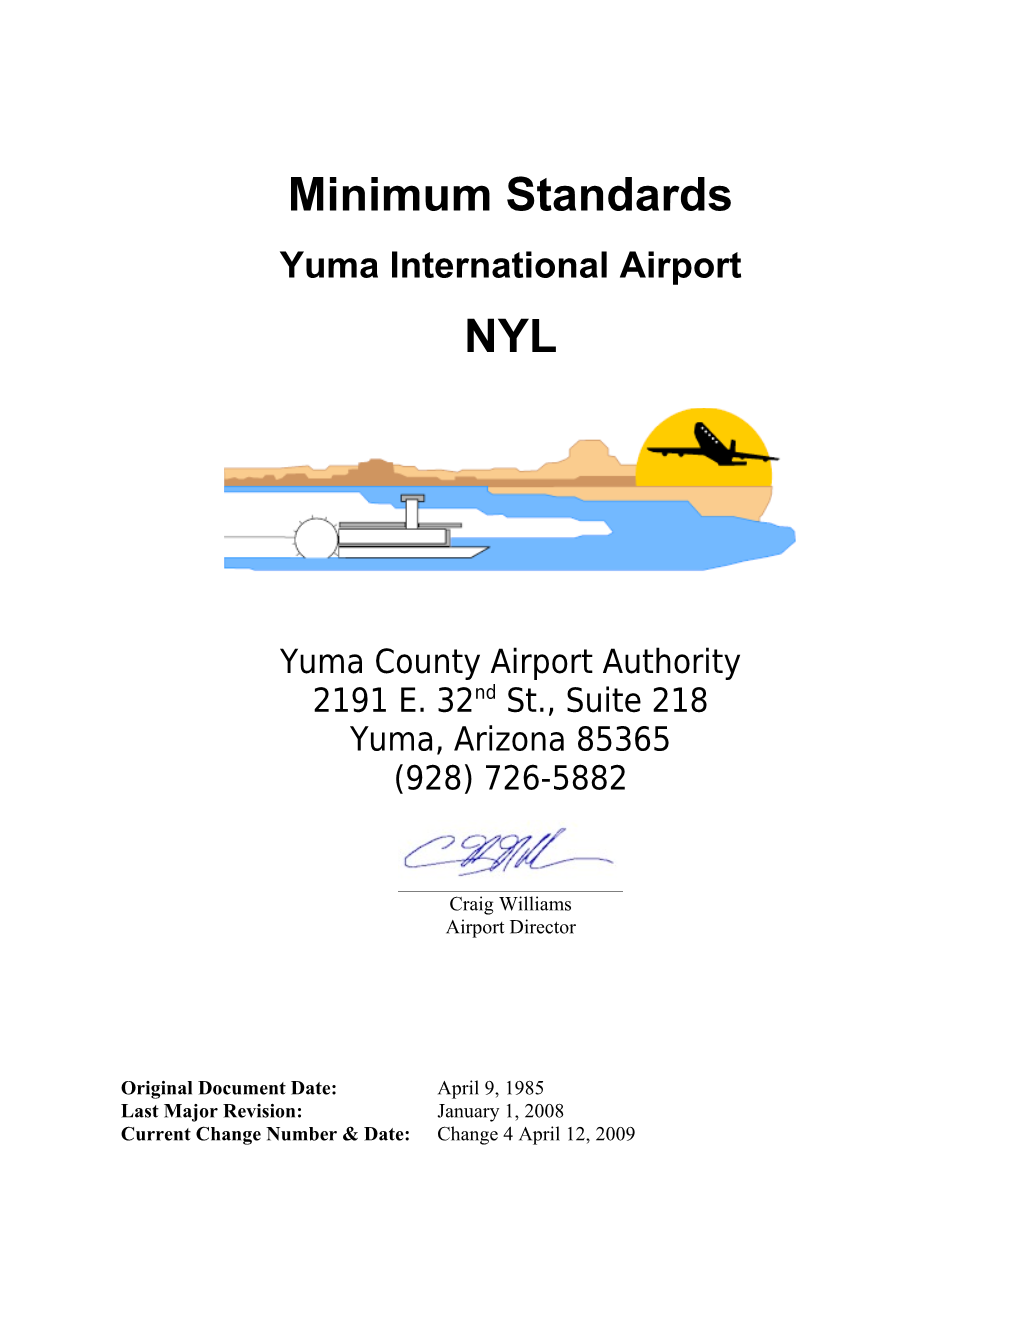 Yuma Airport Minimum Standards